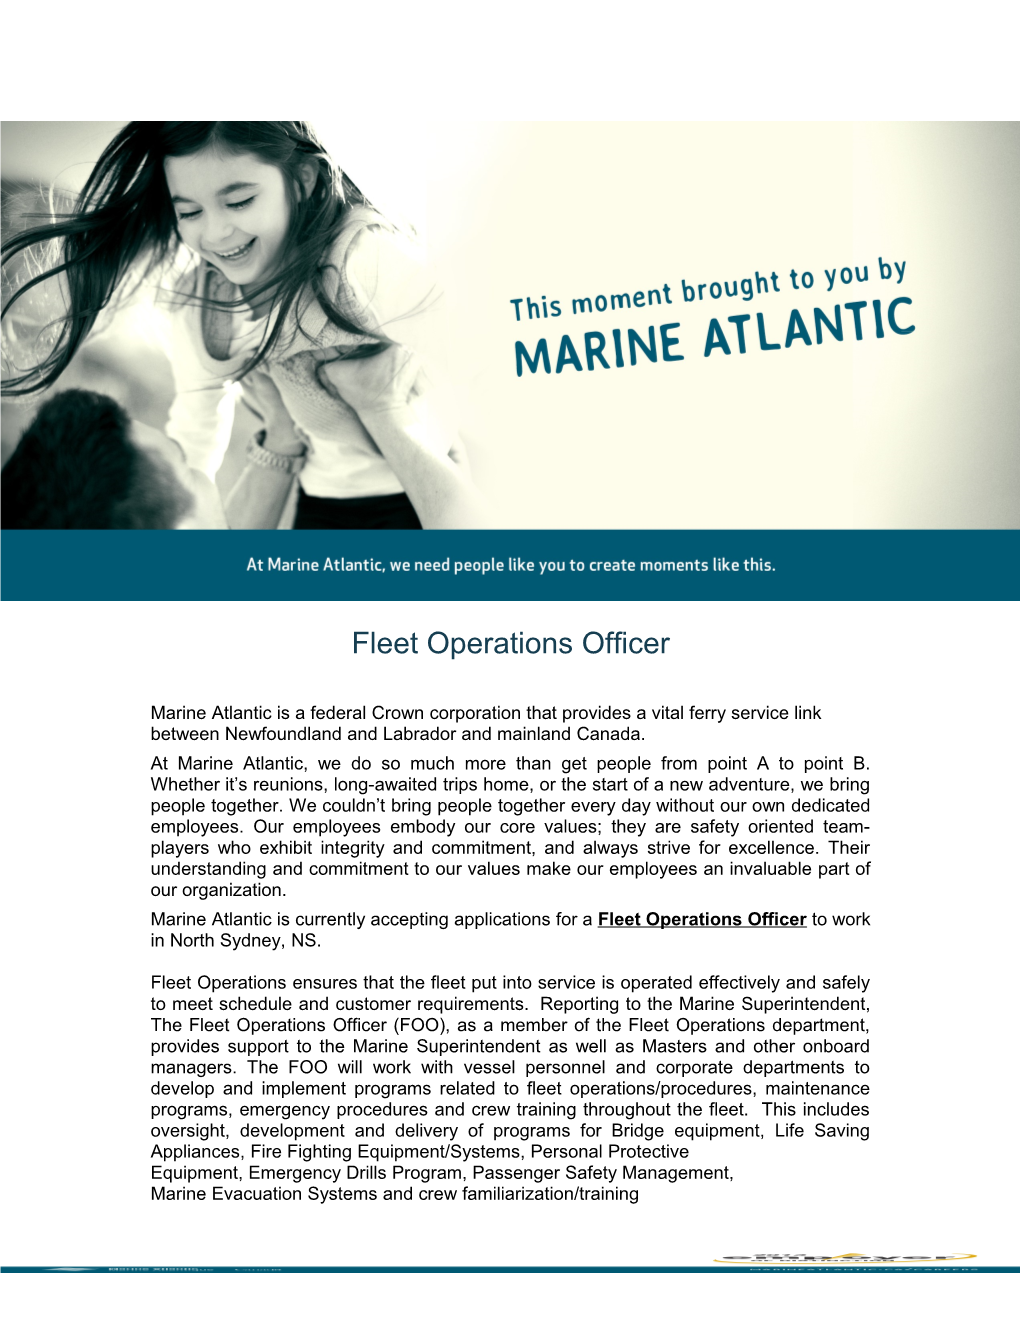 Fleet Operations Officer